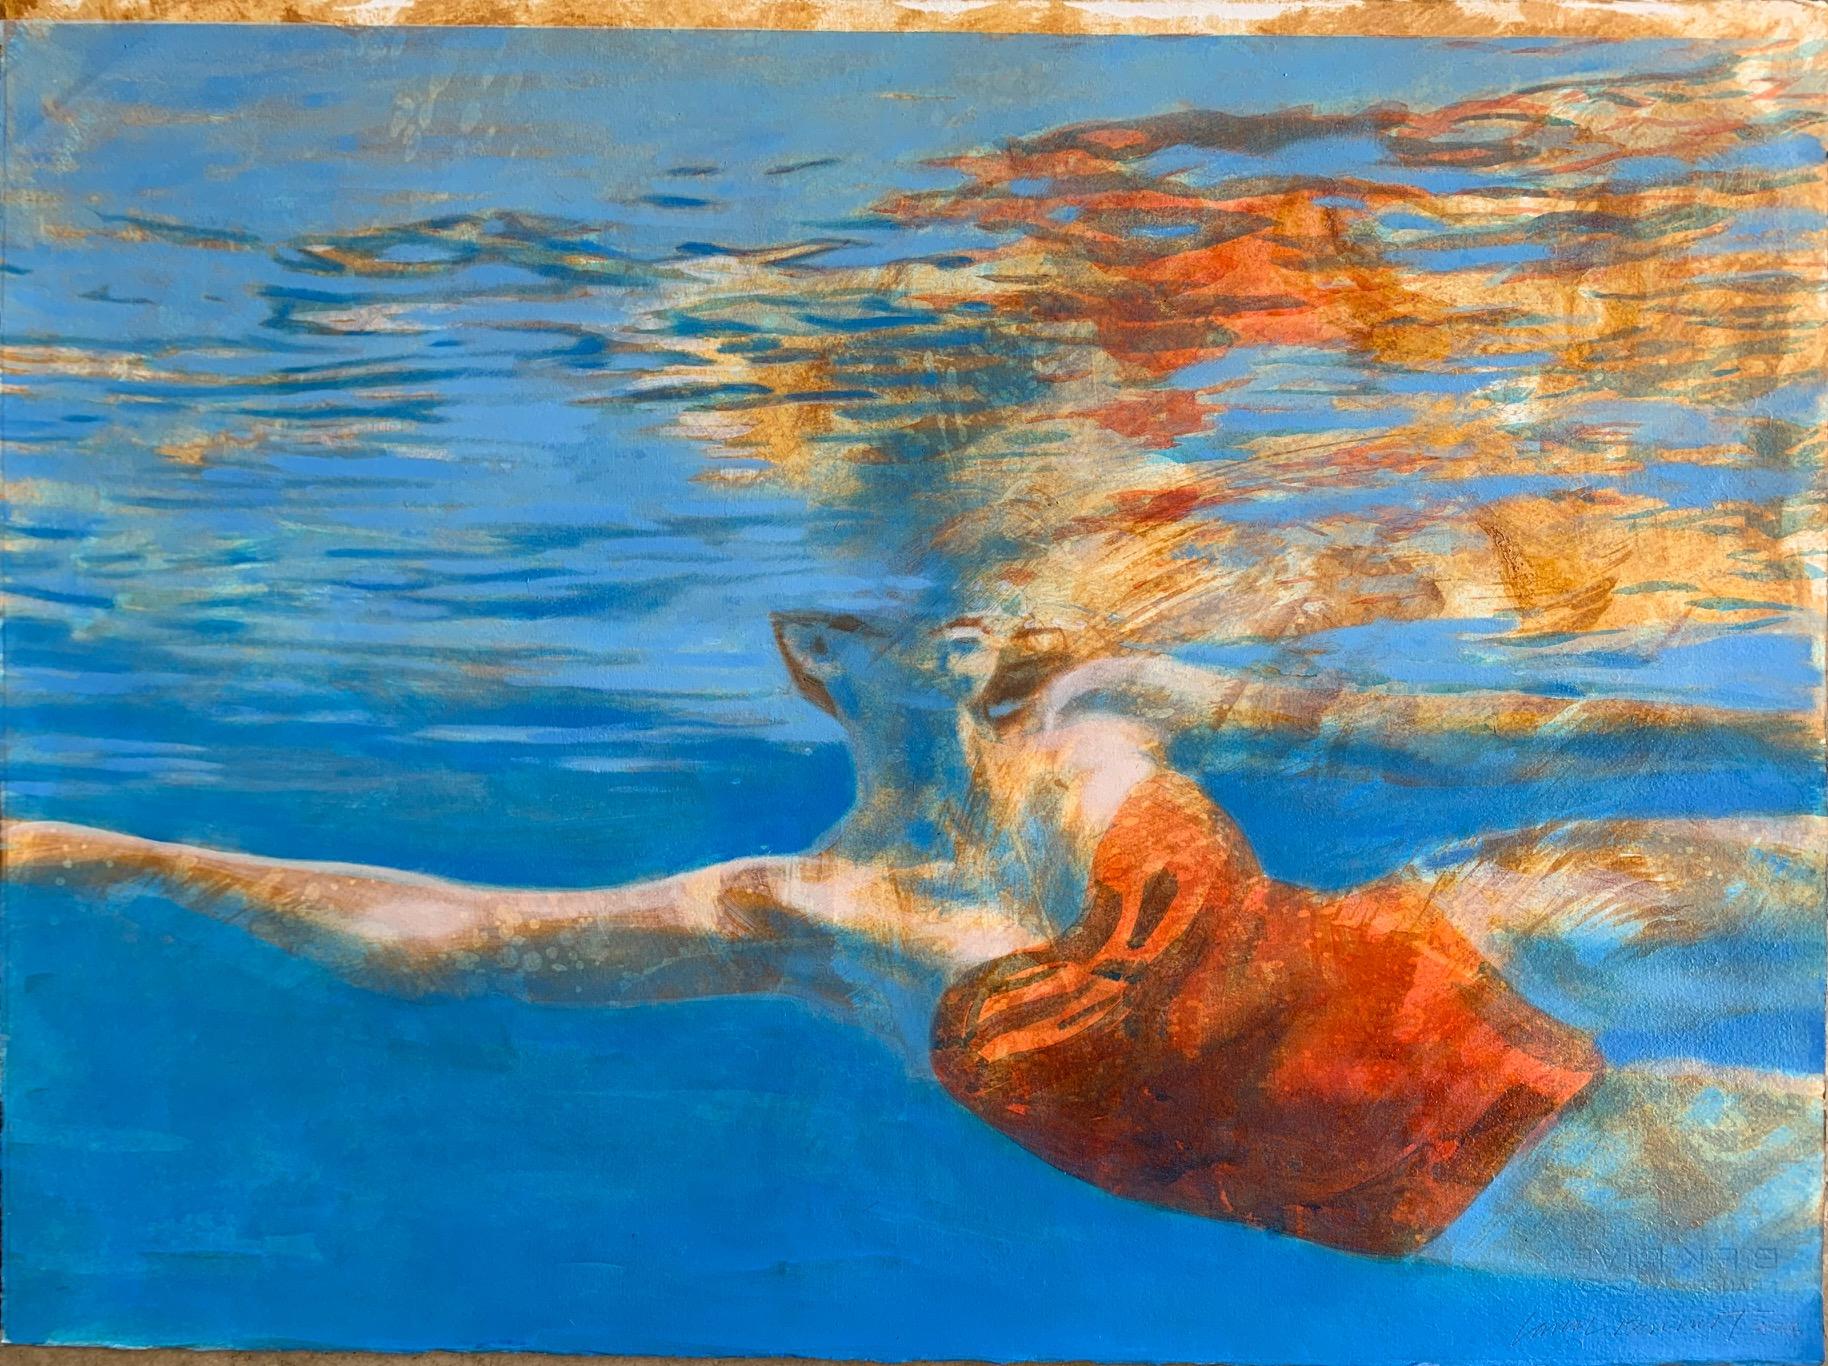 Carol Bennett Figurative Painting - "Slide Right (Paper)" figurative oil painting of swimmer underwater red swimsuit